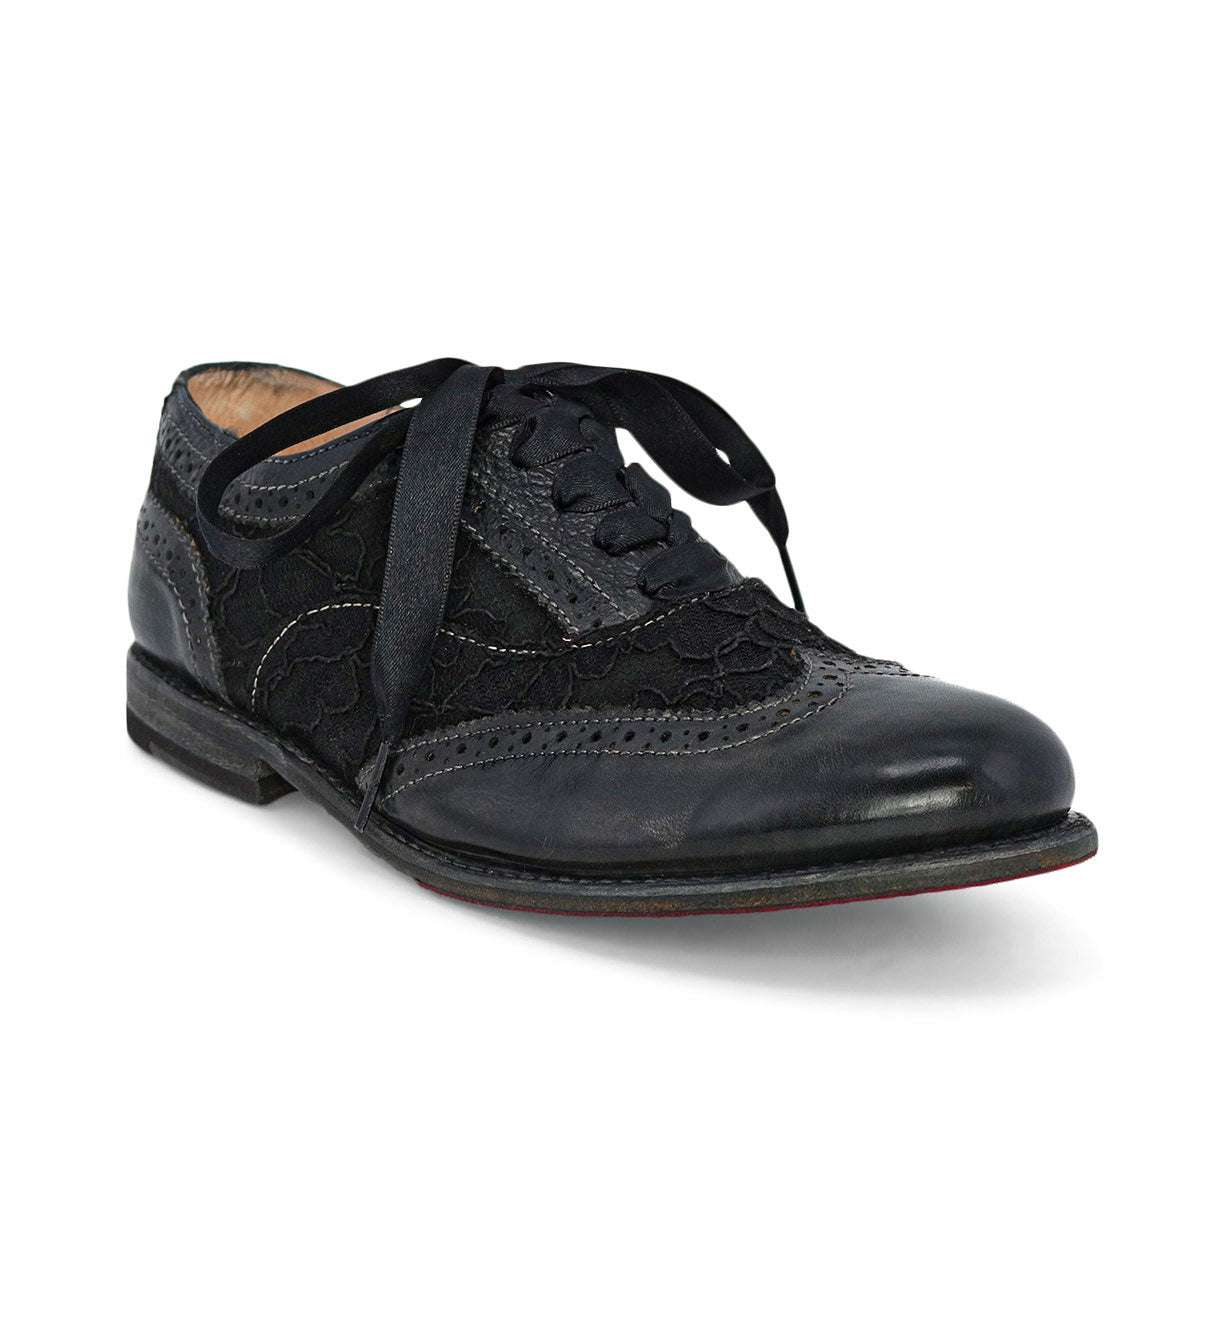 A men's black rustic lace-up Maude oxford shoe from Oak Tree Farms.